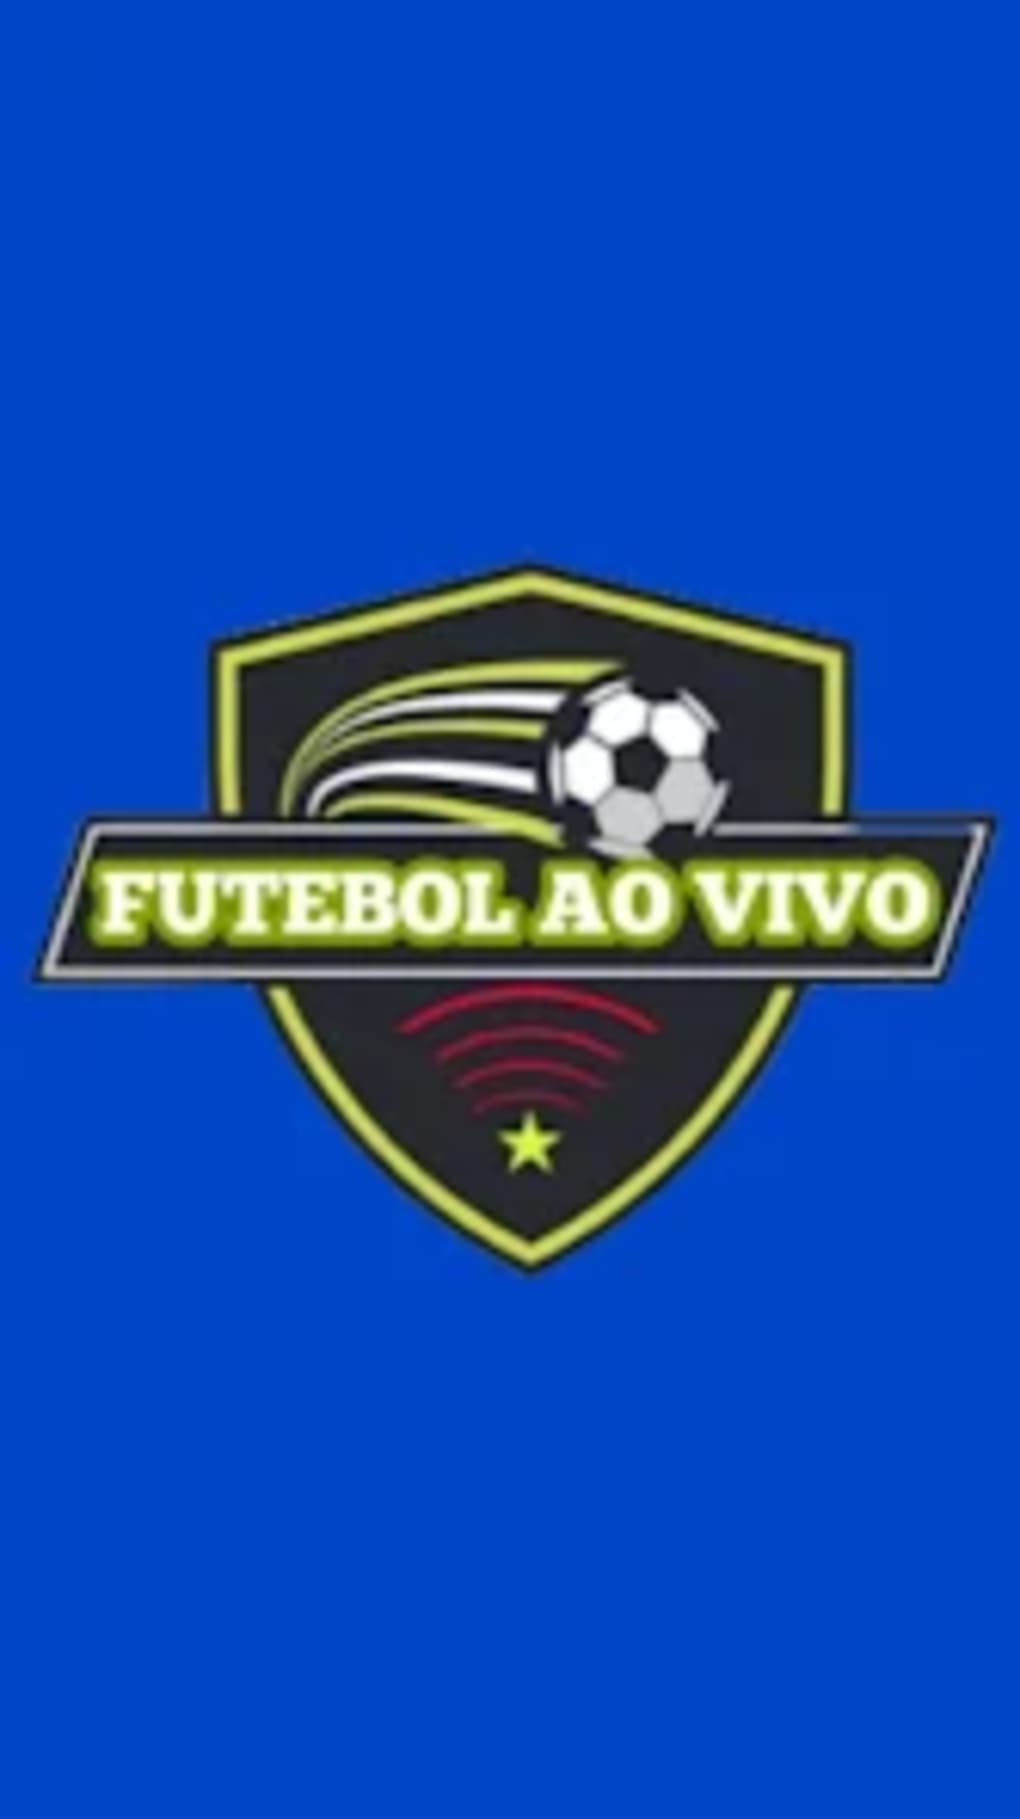 Download FuteMix Futebol ao vivo on PC with MEmu